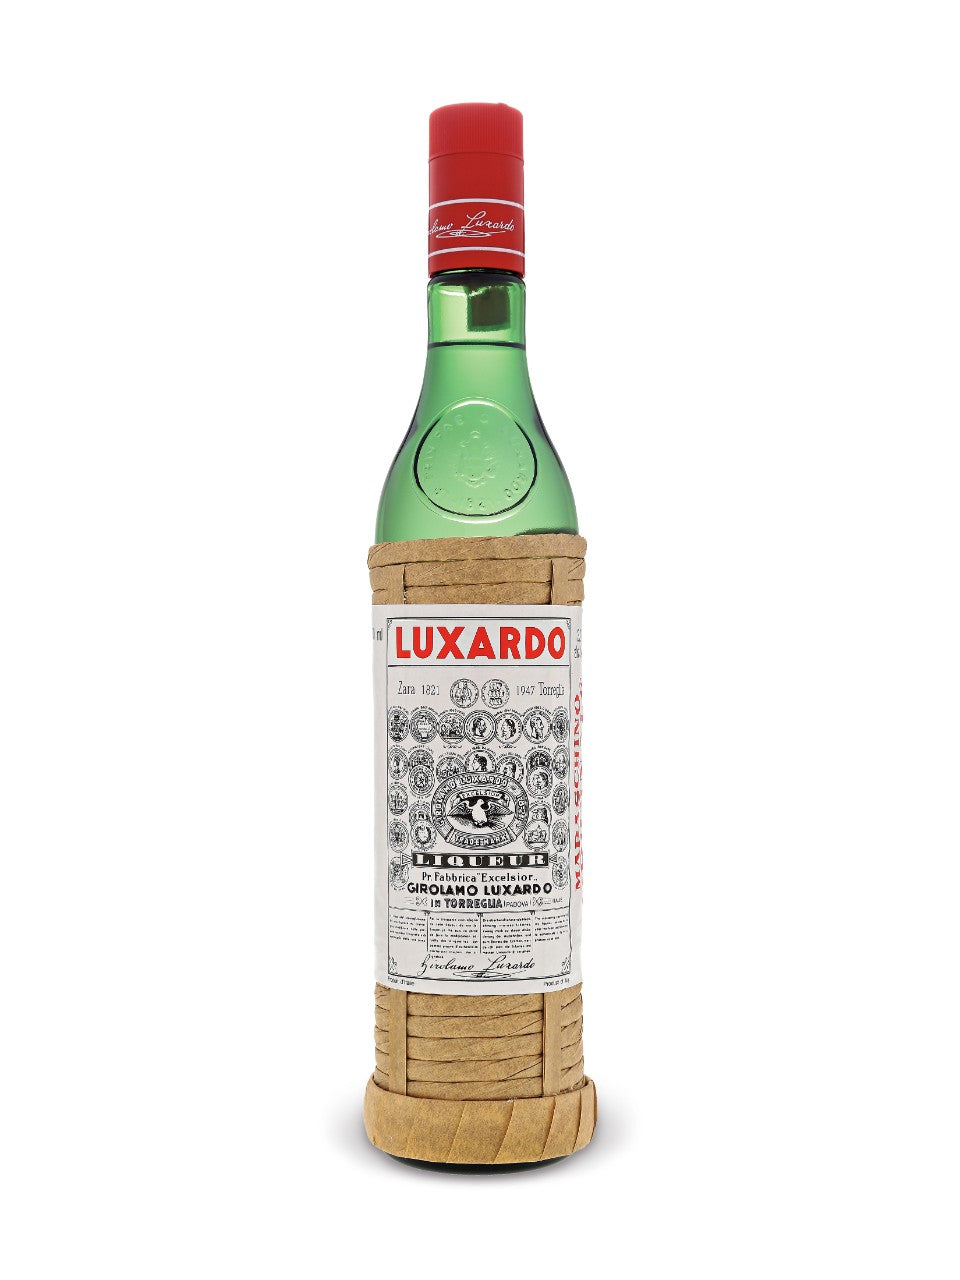 Luxardo Maraschino Liqueur 750 mL bottle